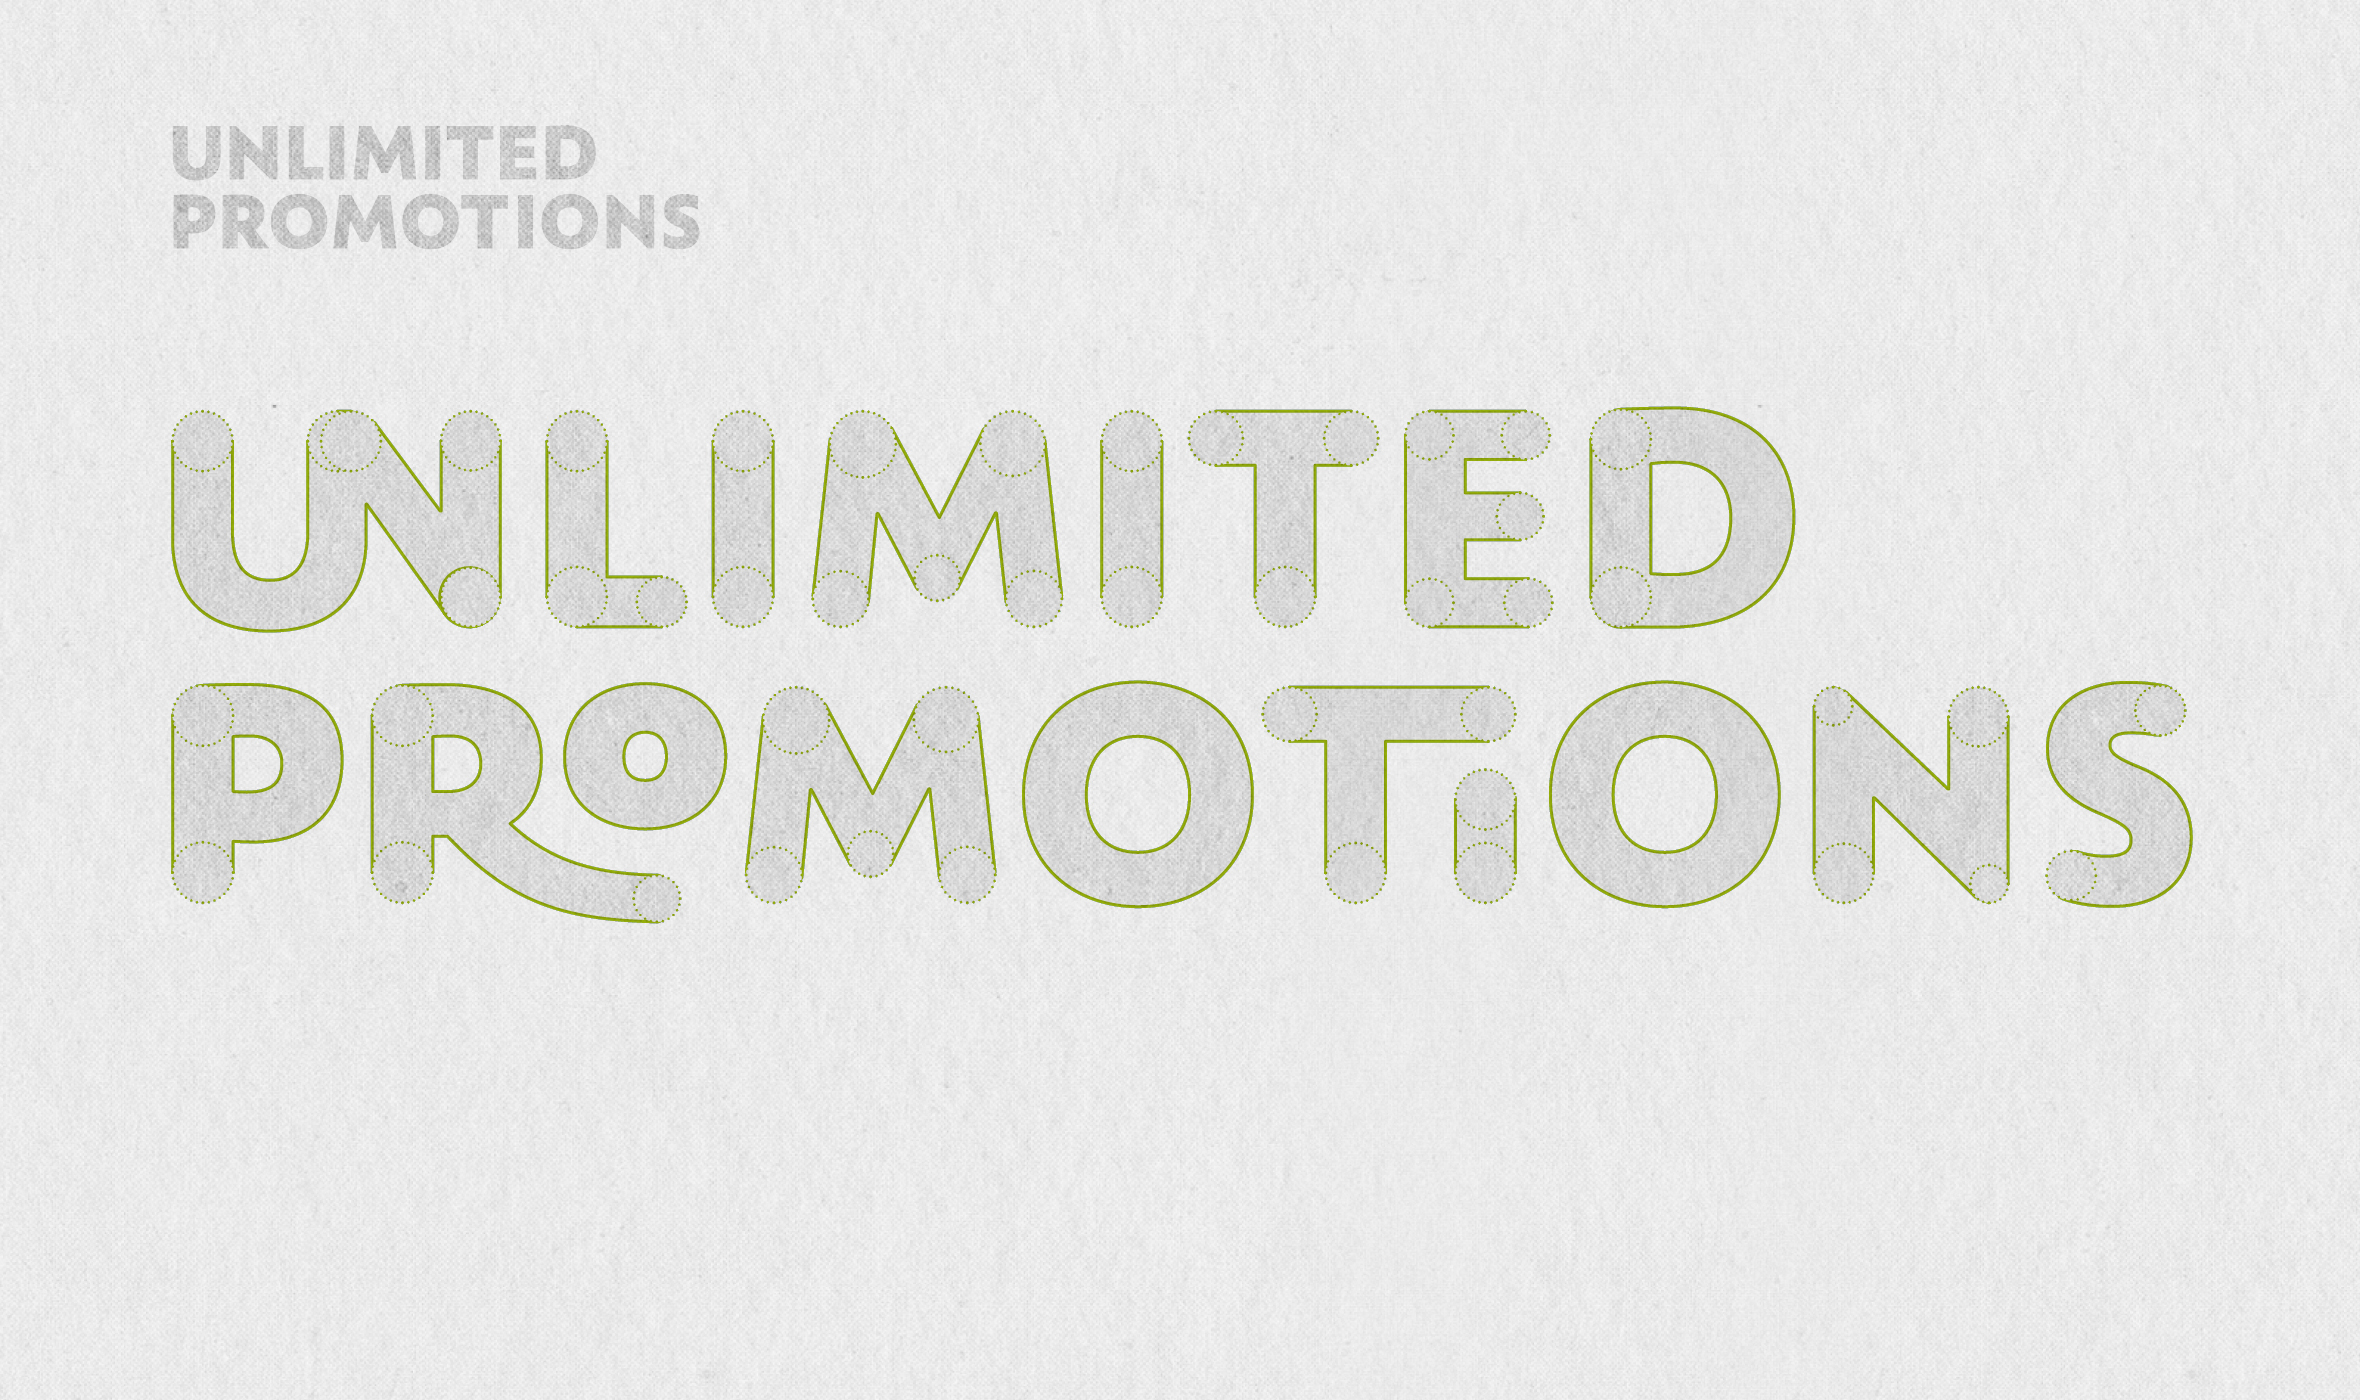 Unlimited Promotions, Logoentwicklung, Wortmarke, Aufbau